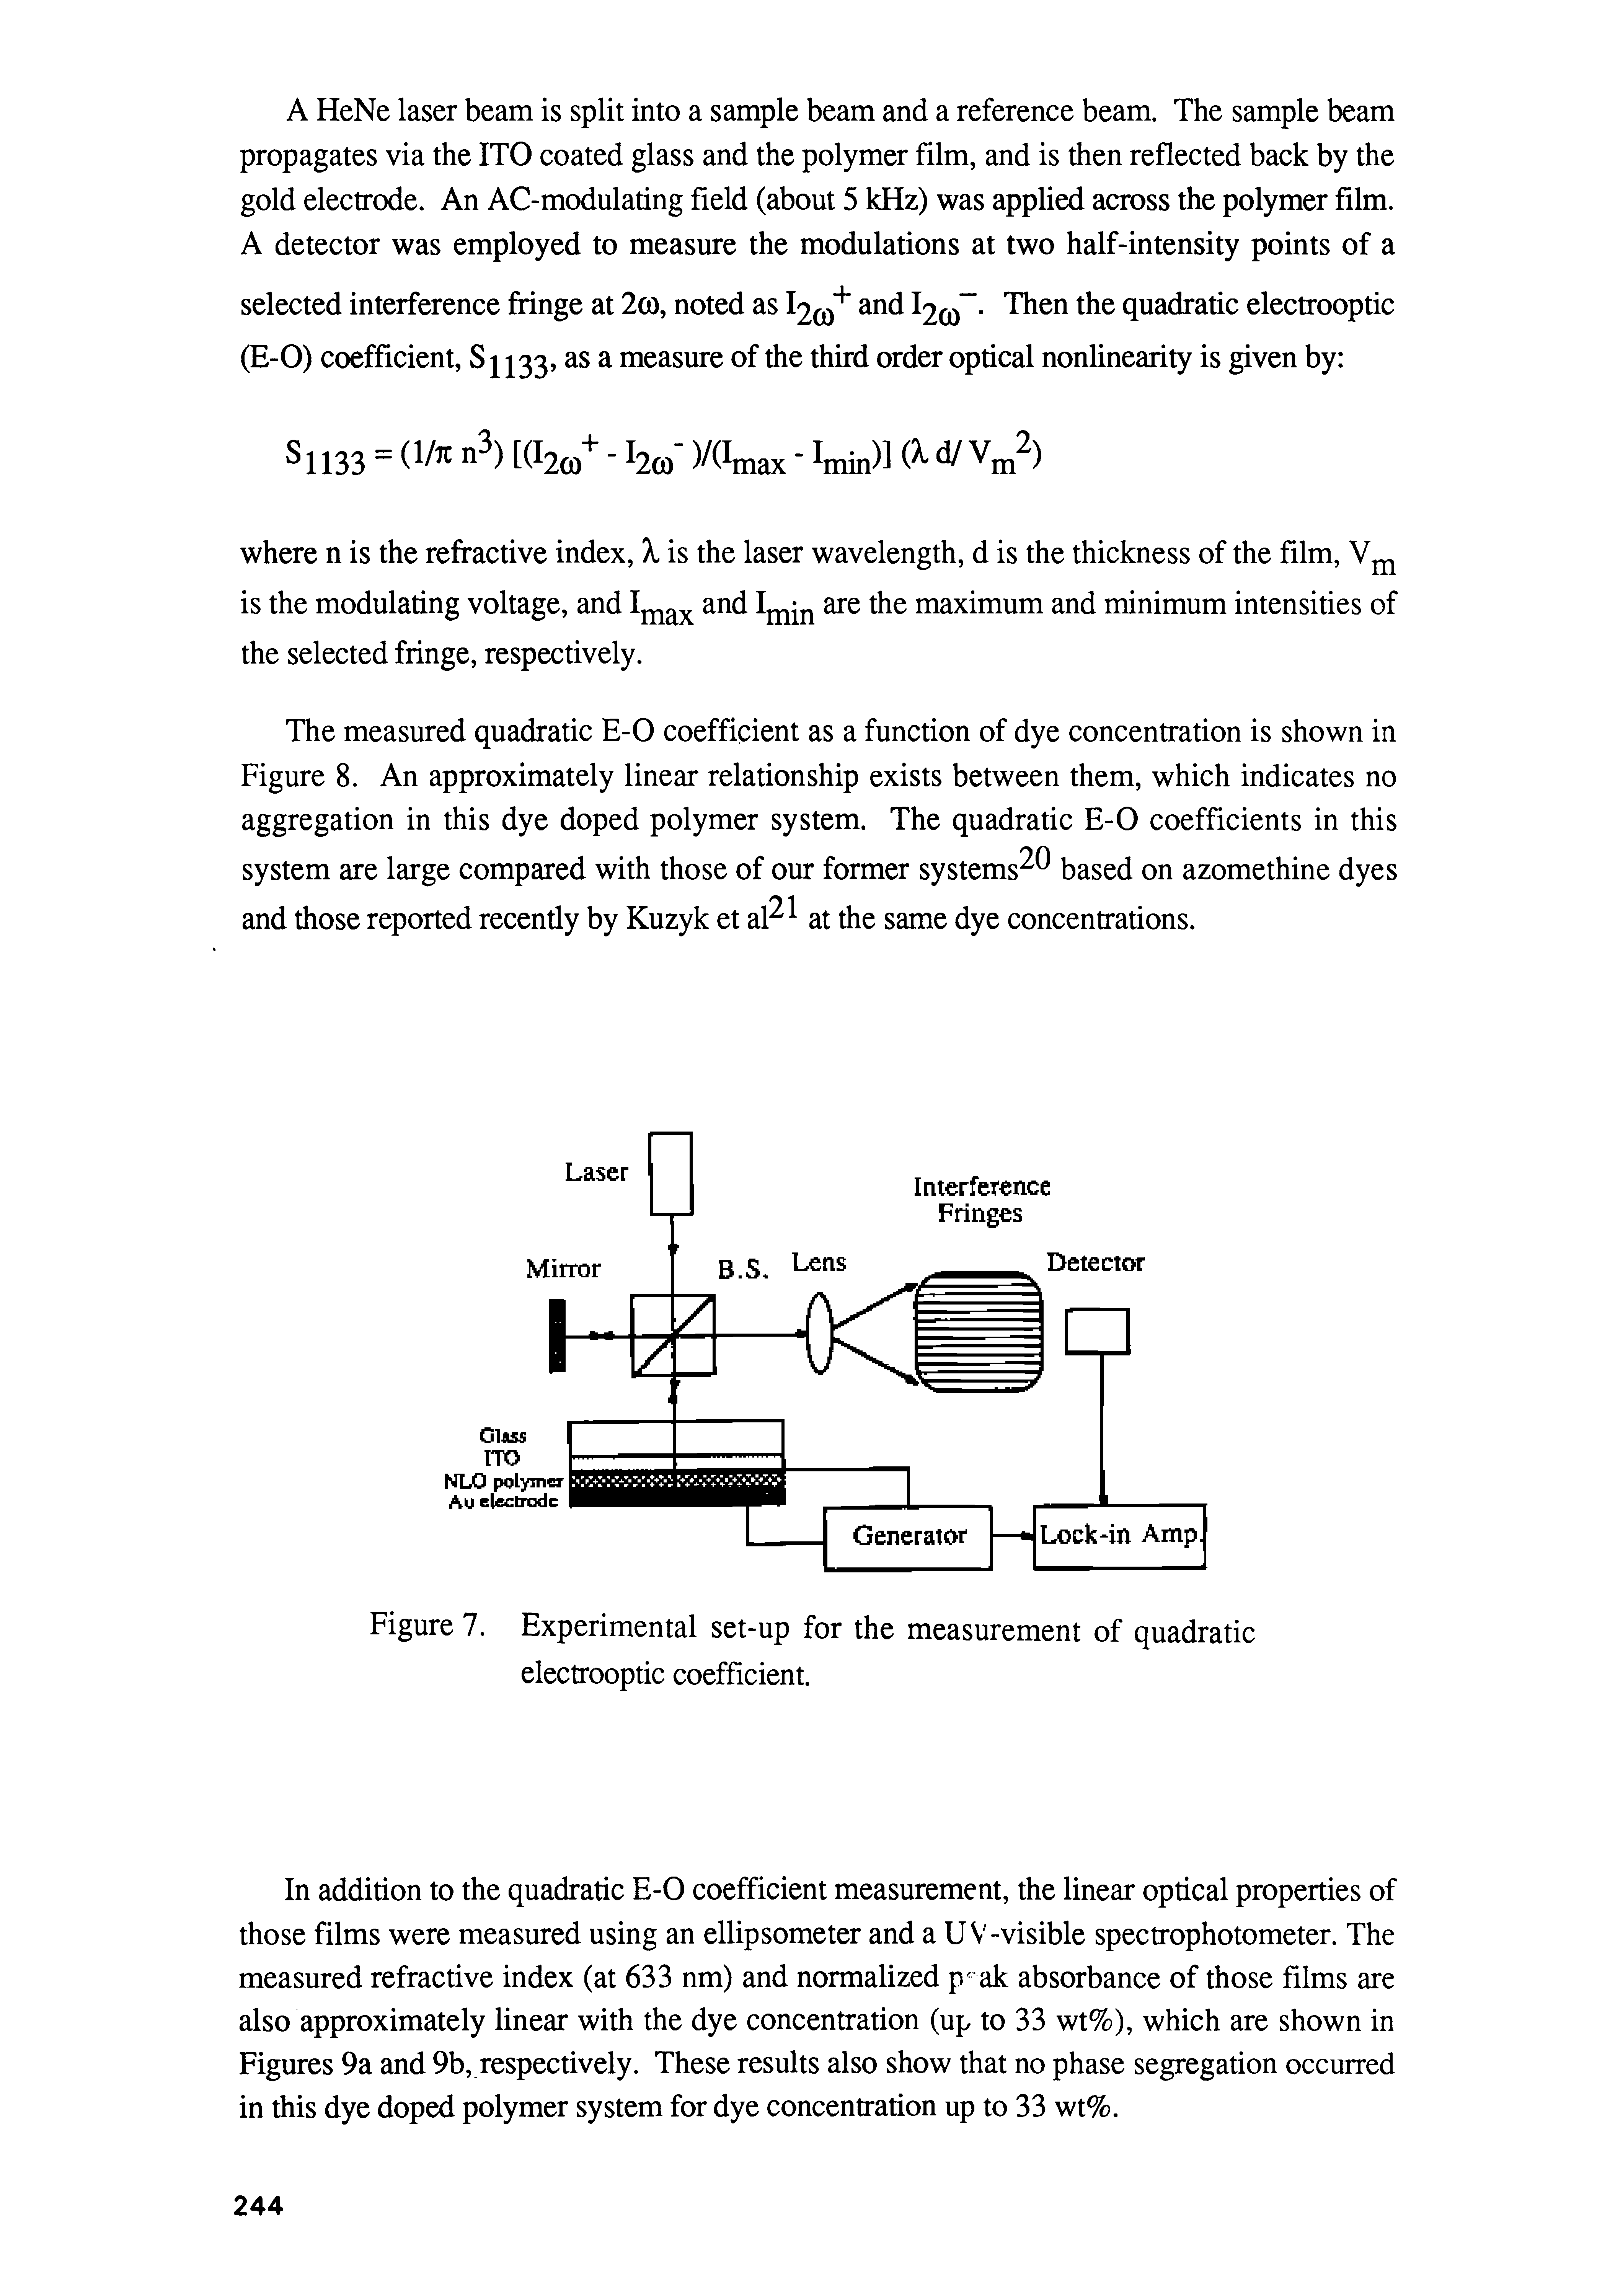 Figure 7. Experimental set-up for the measurement of quadratic electrooptic coefficient.